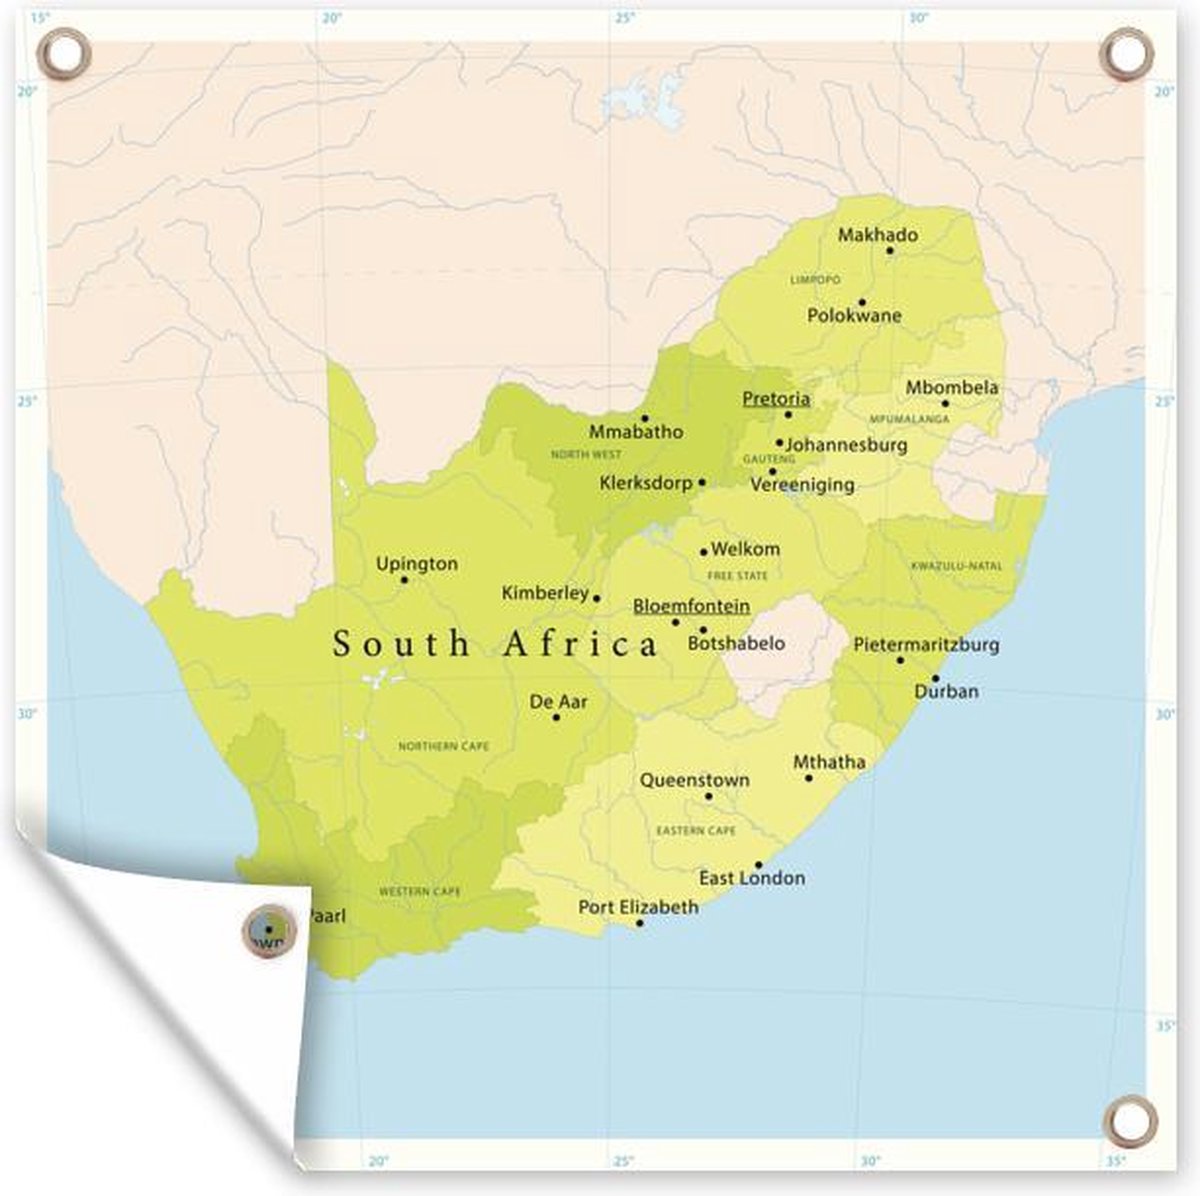 Йоханнесбург на карте. Порт Элизабет ЮАР на карте. Дурбан ЮАР на карте. Ист Лондон ЮАР на карте. Дурбан Южная Африка карта.